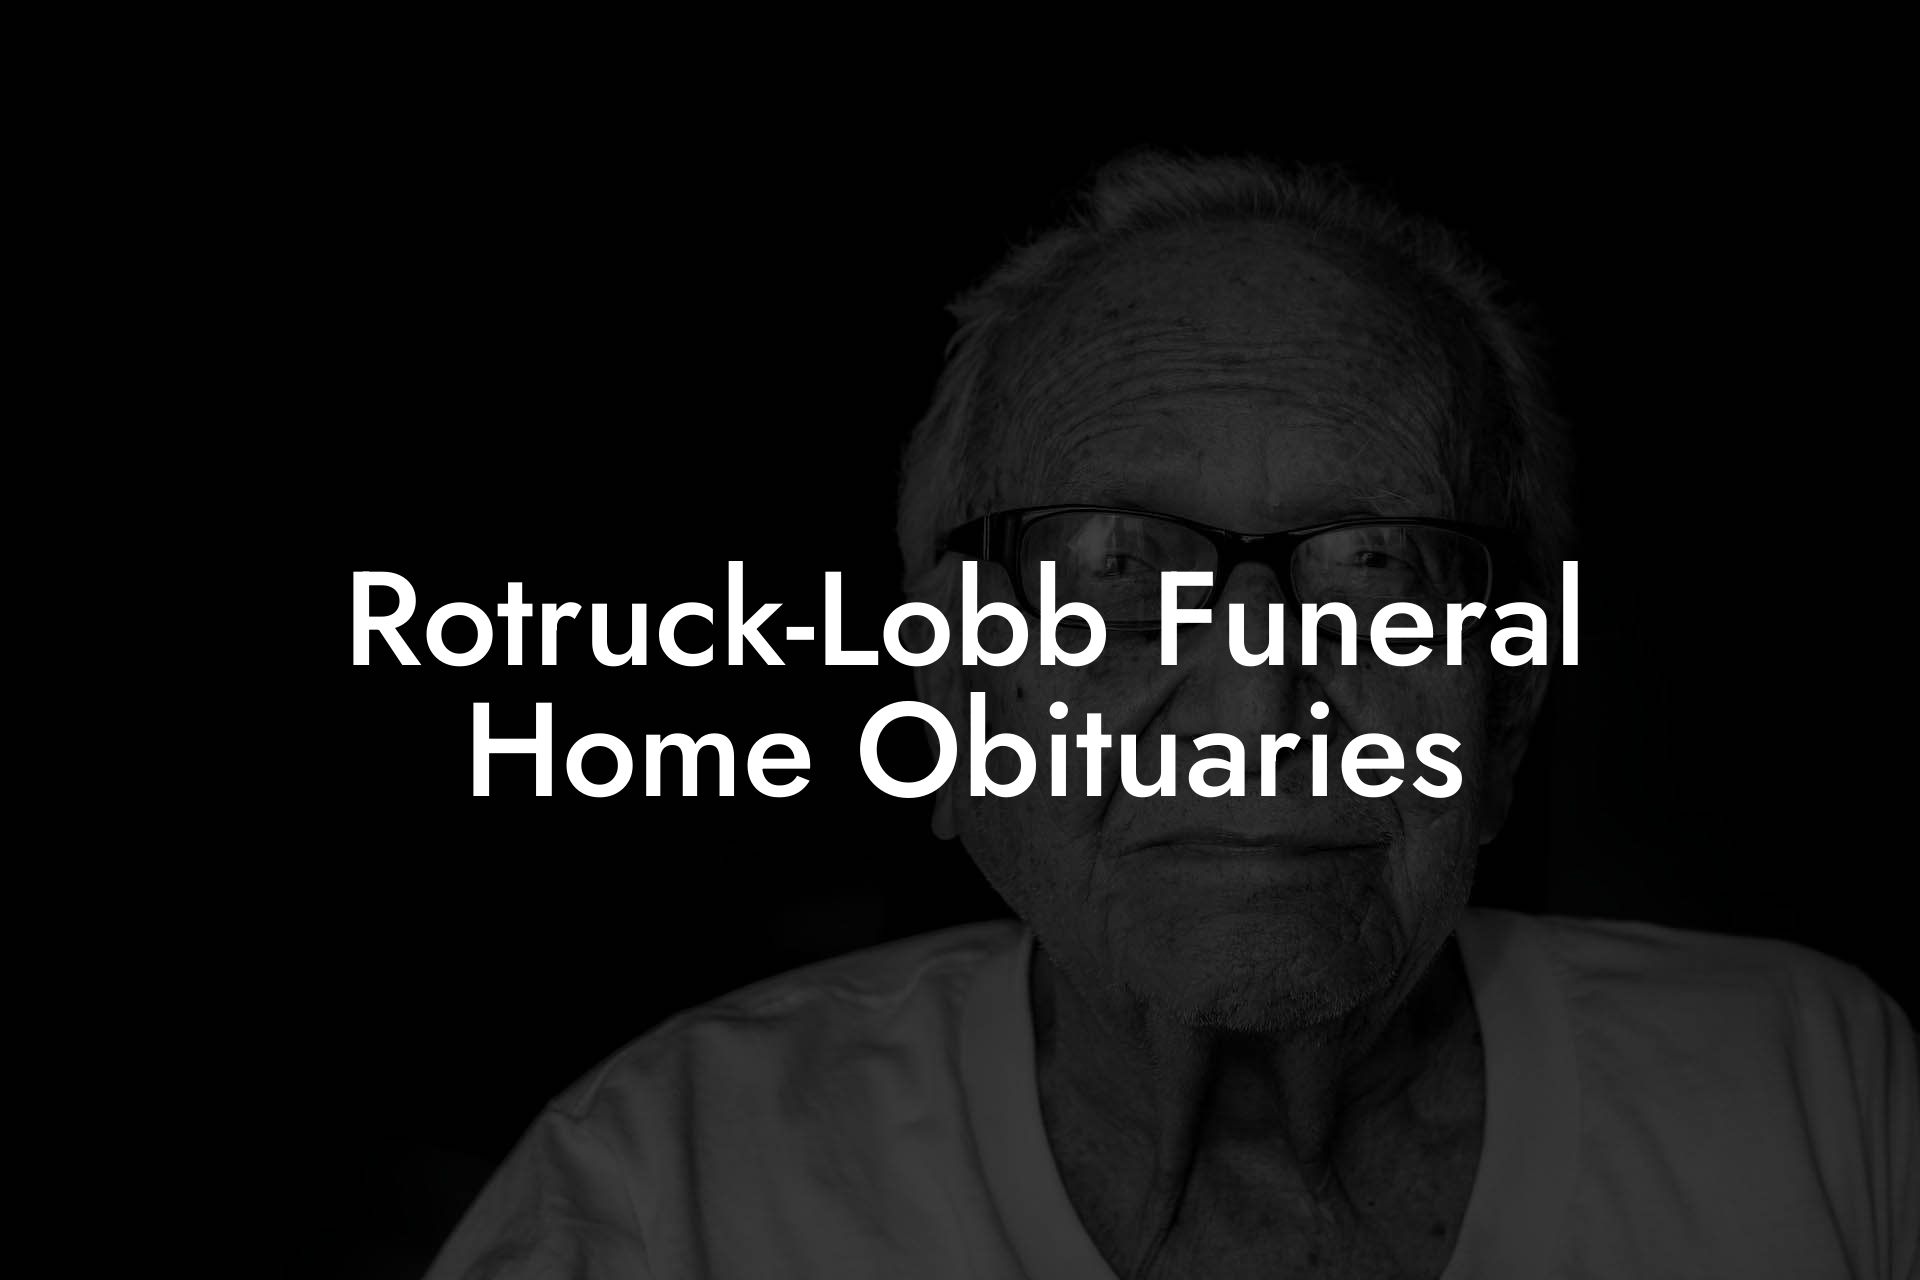 Rotruck-Lobb Funeral Home Obituaries